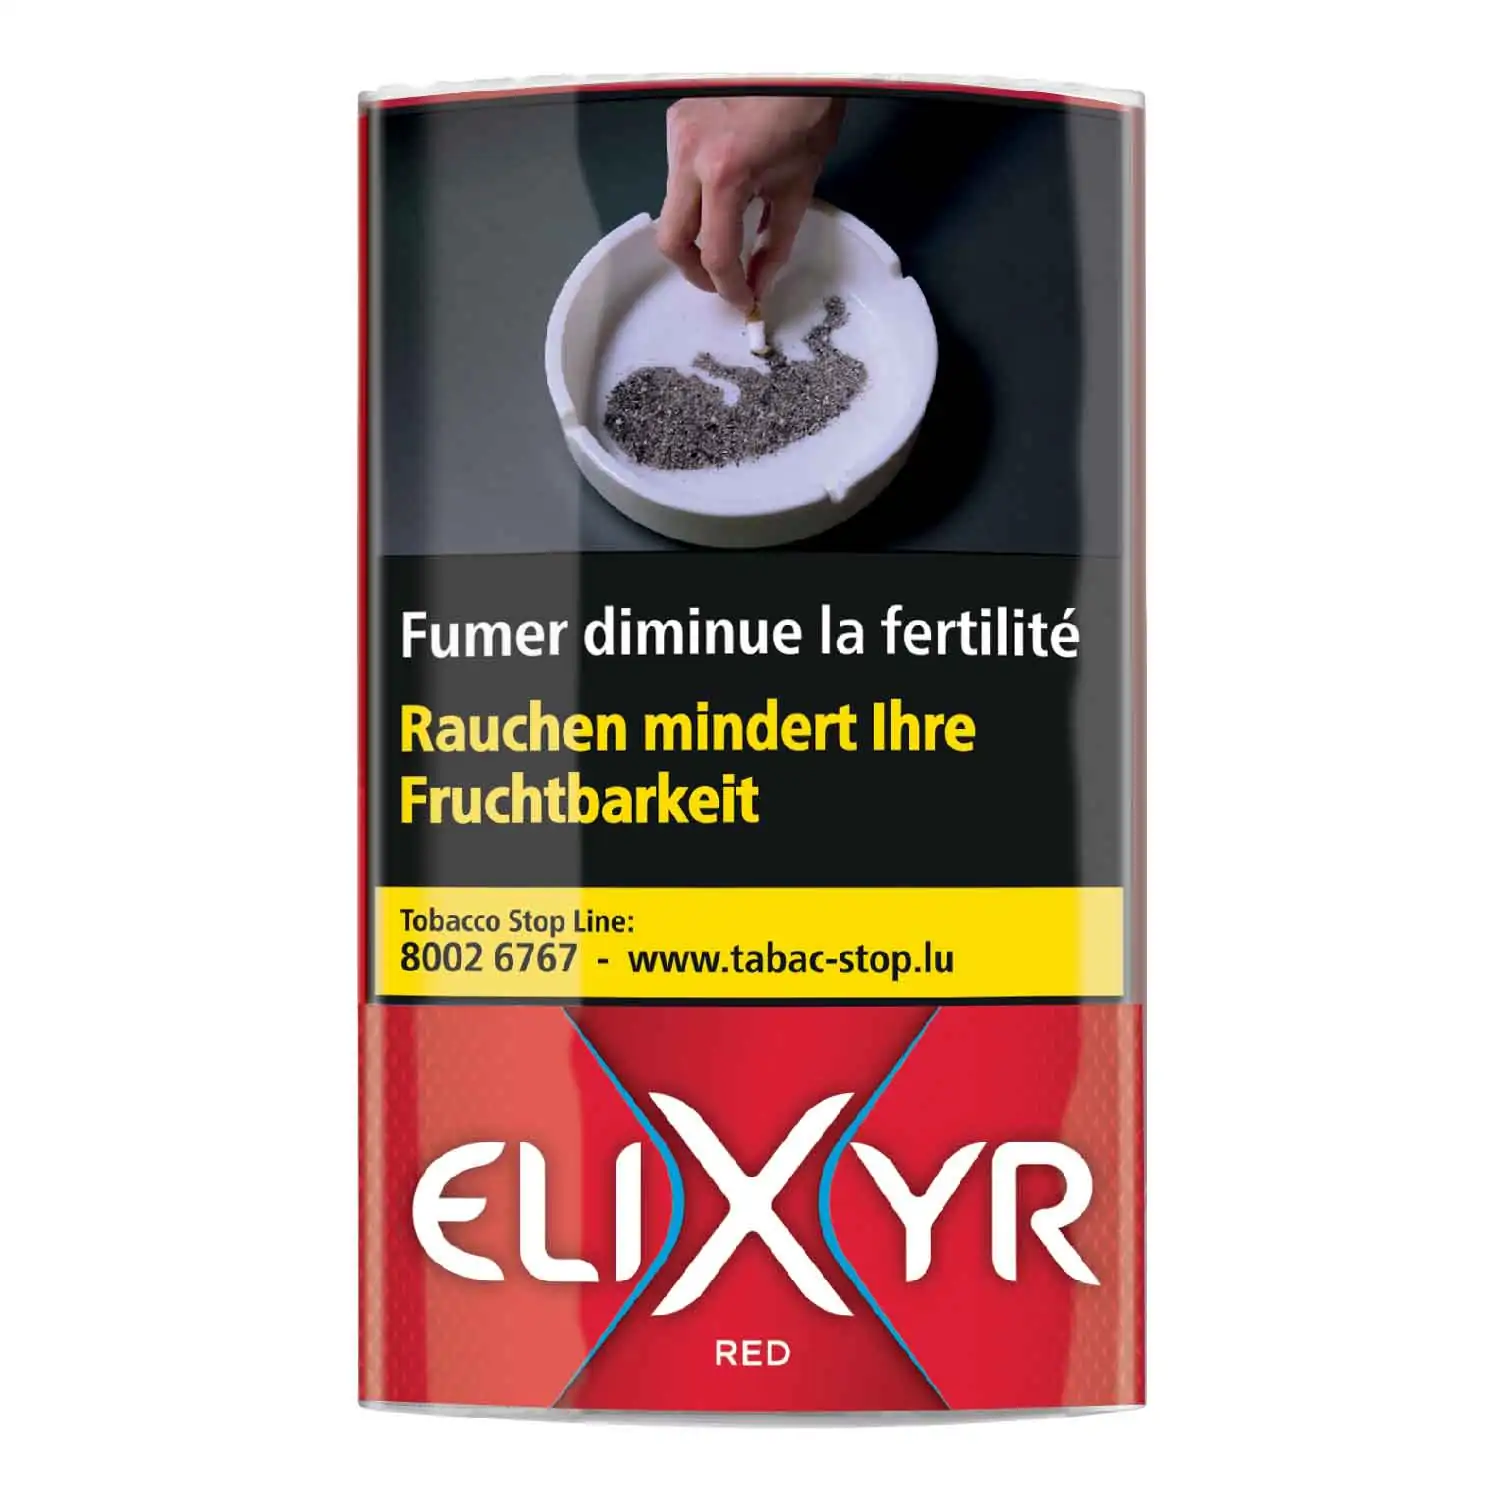 Elixyr original rouge 30g - Buy at Real Tobacco